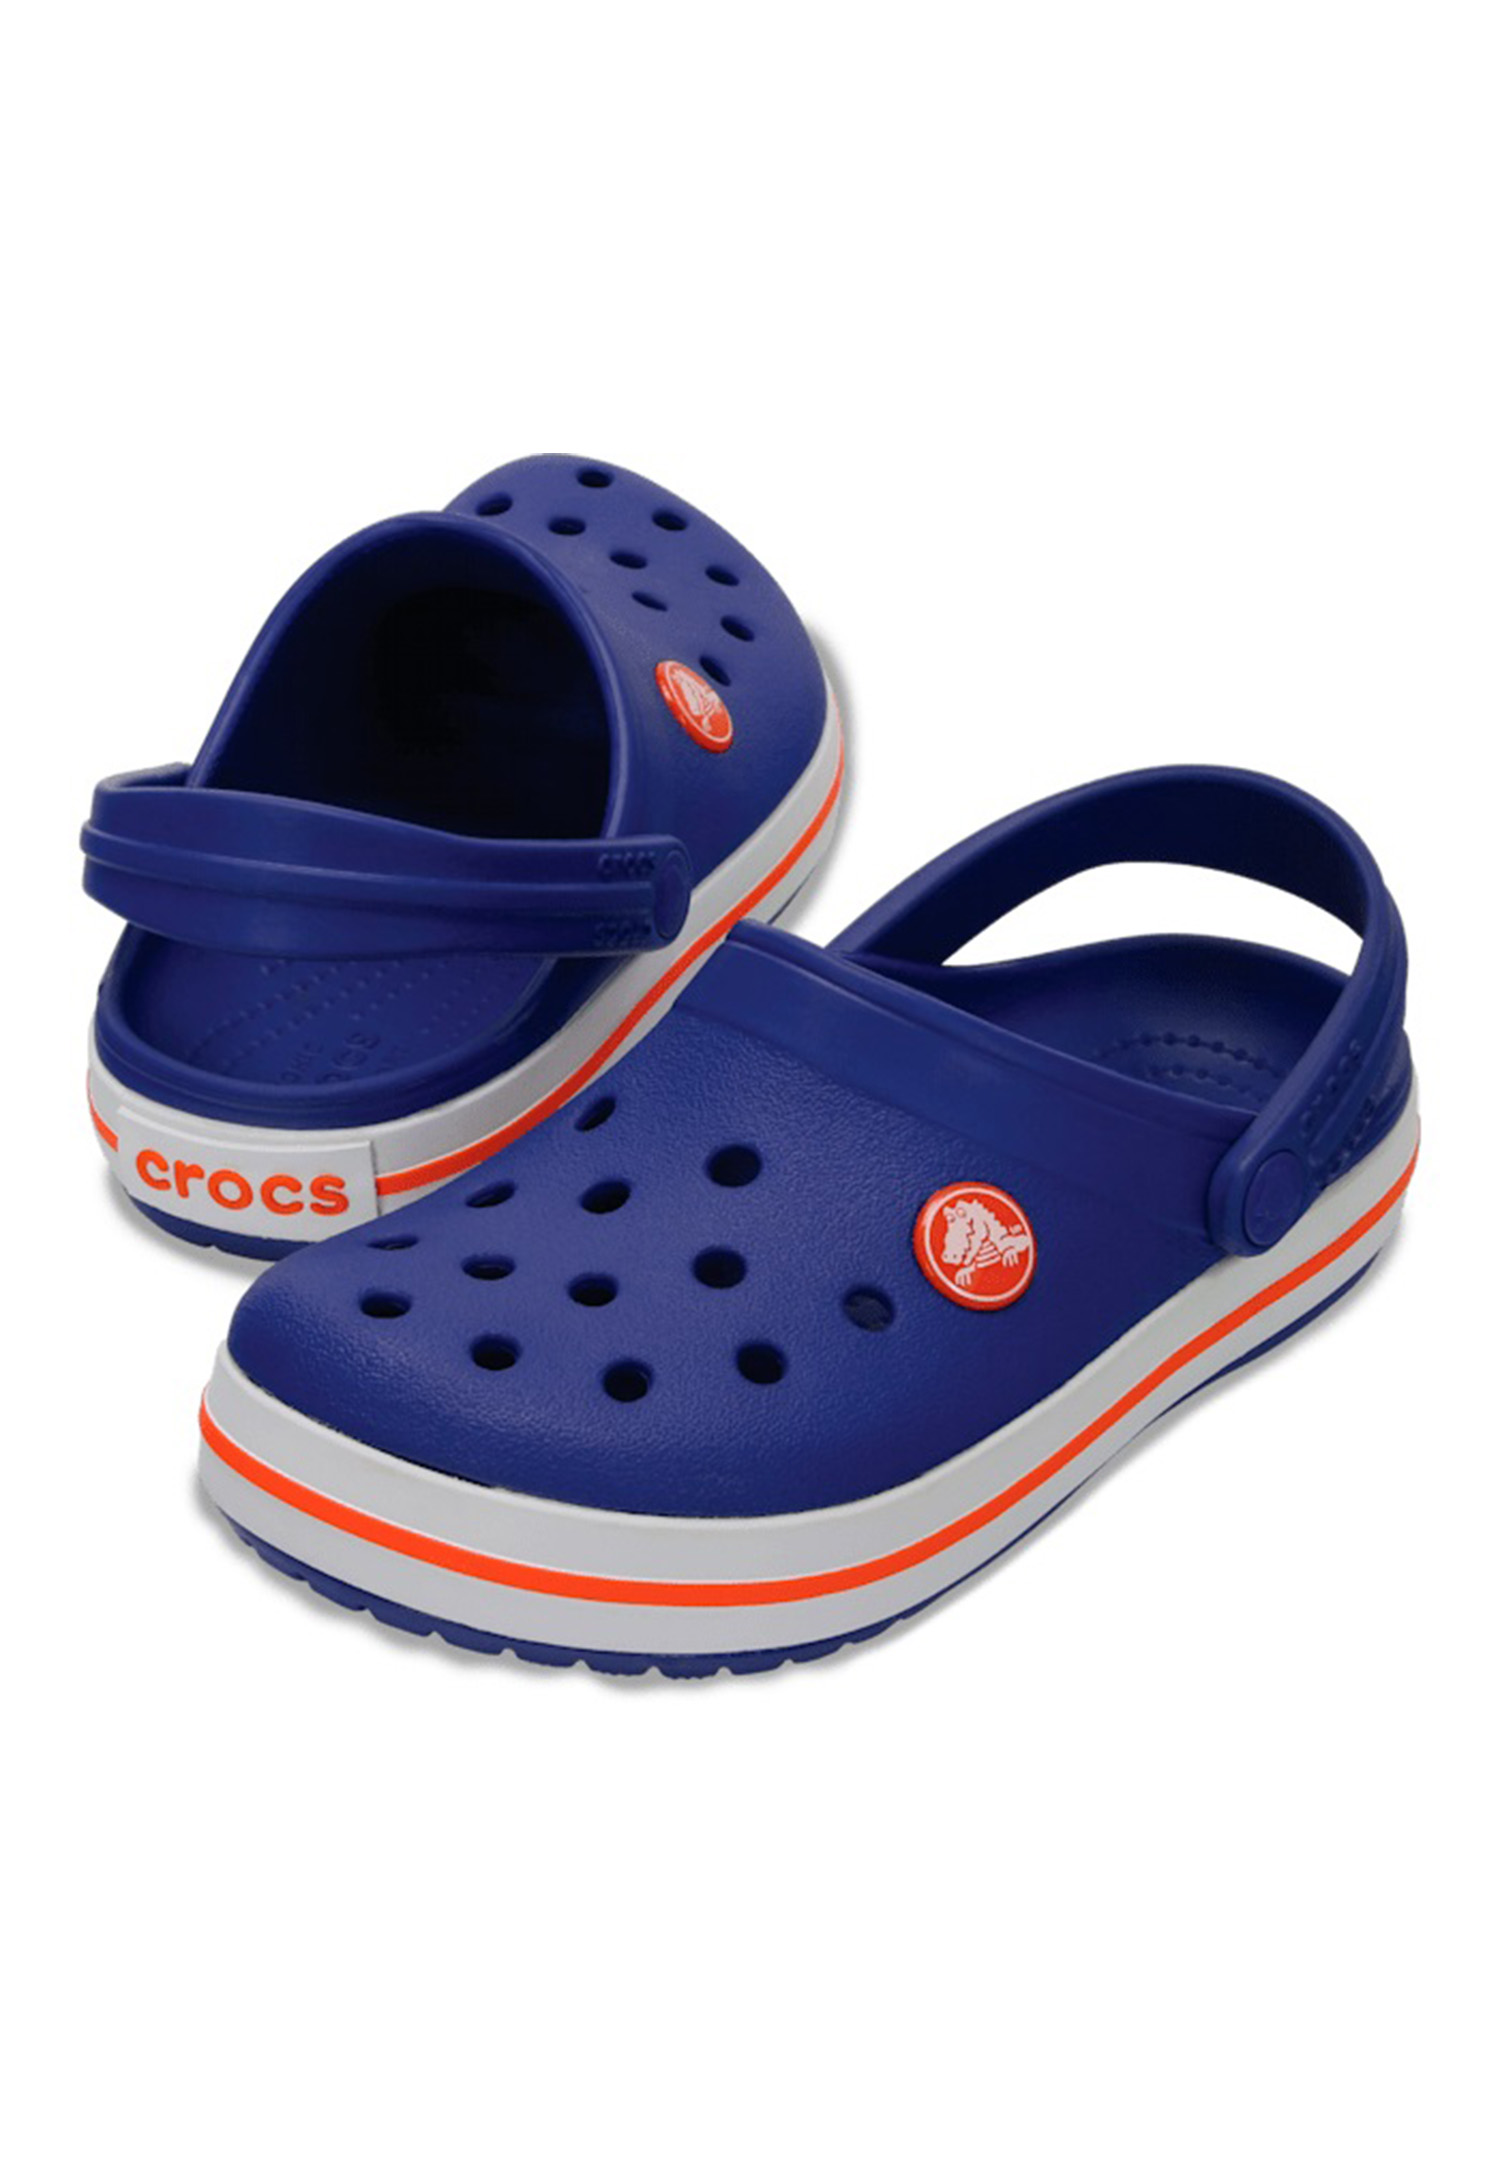 Crocs Kids Crocband Clog Unisex Kinder Schuhe Sandalen 207006 Blau von Crocs